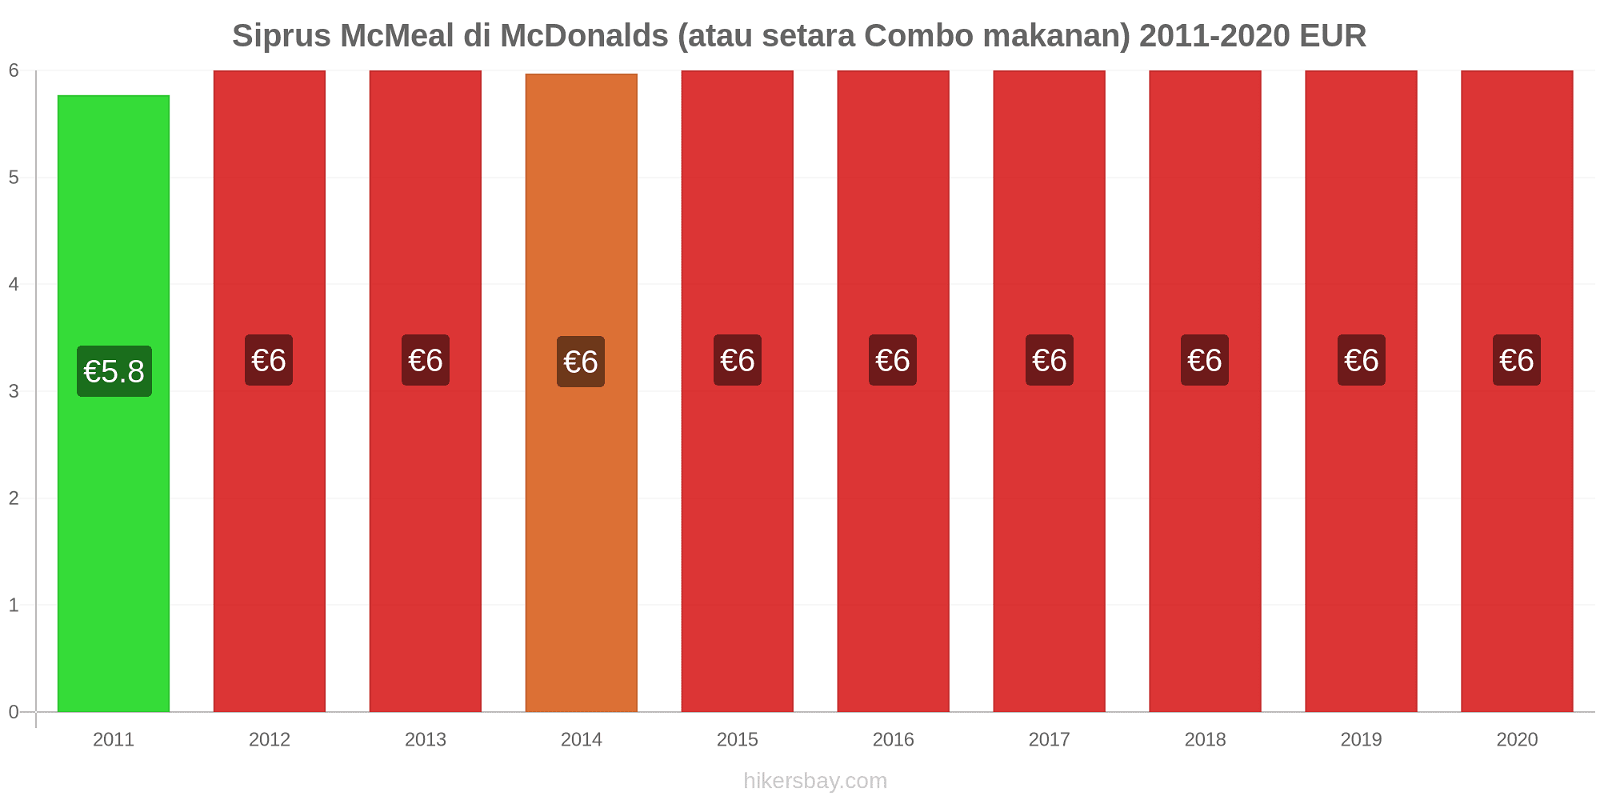 Siprus perubahan harga McMeal di McDonalds (atau setara Combo makanan) hikersbay.com